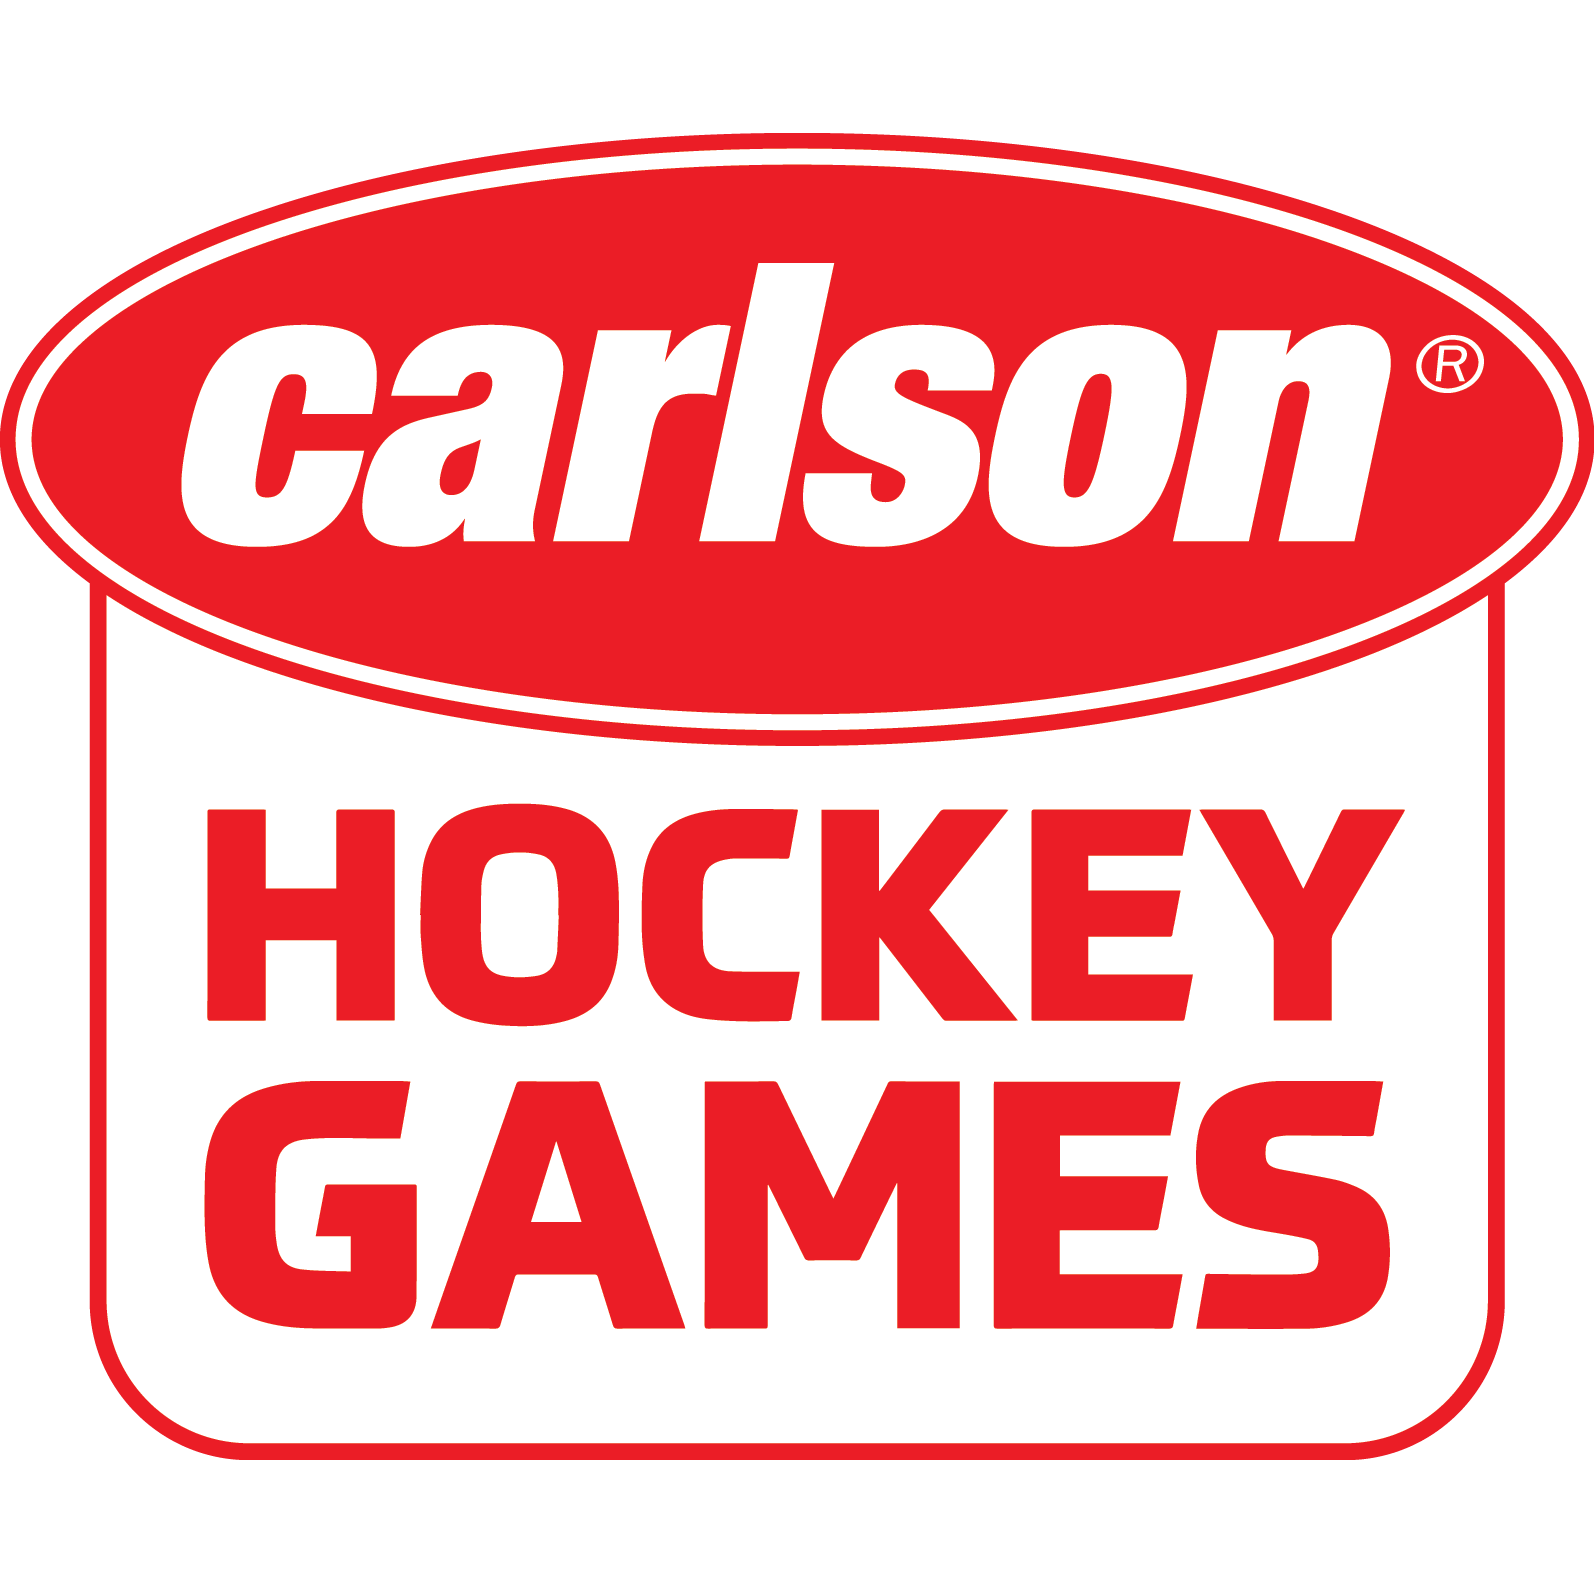 2018 Euro Hockey Tour - Carlson Hockey Games